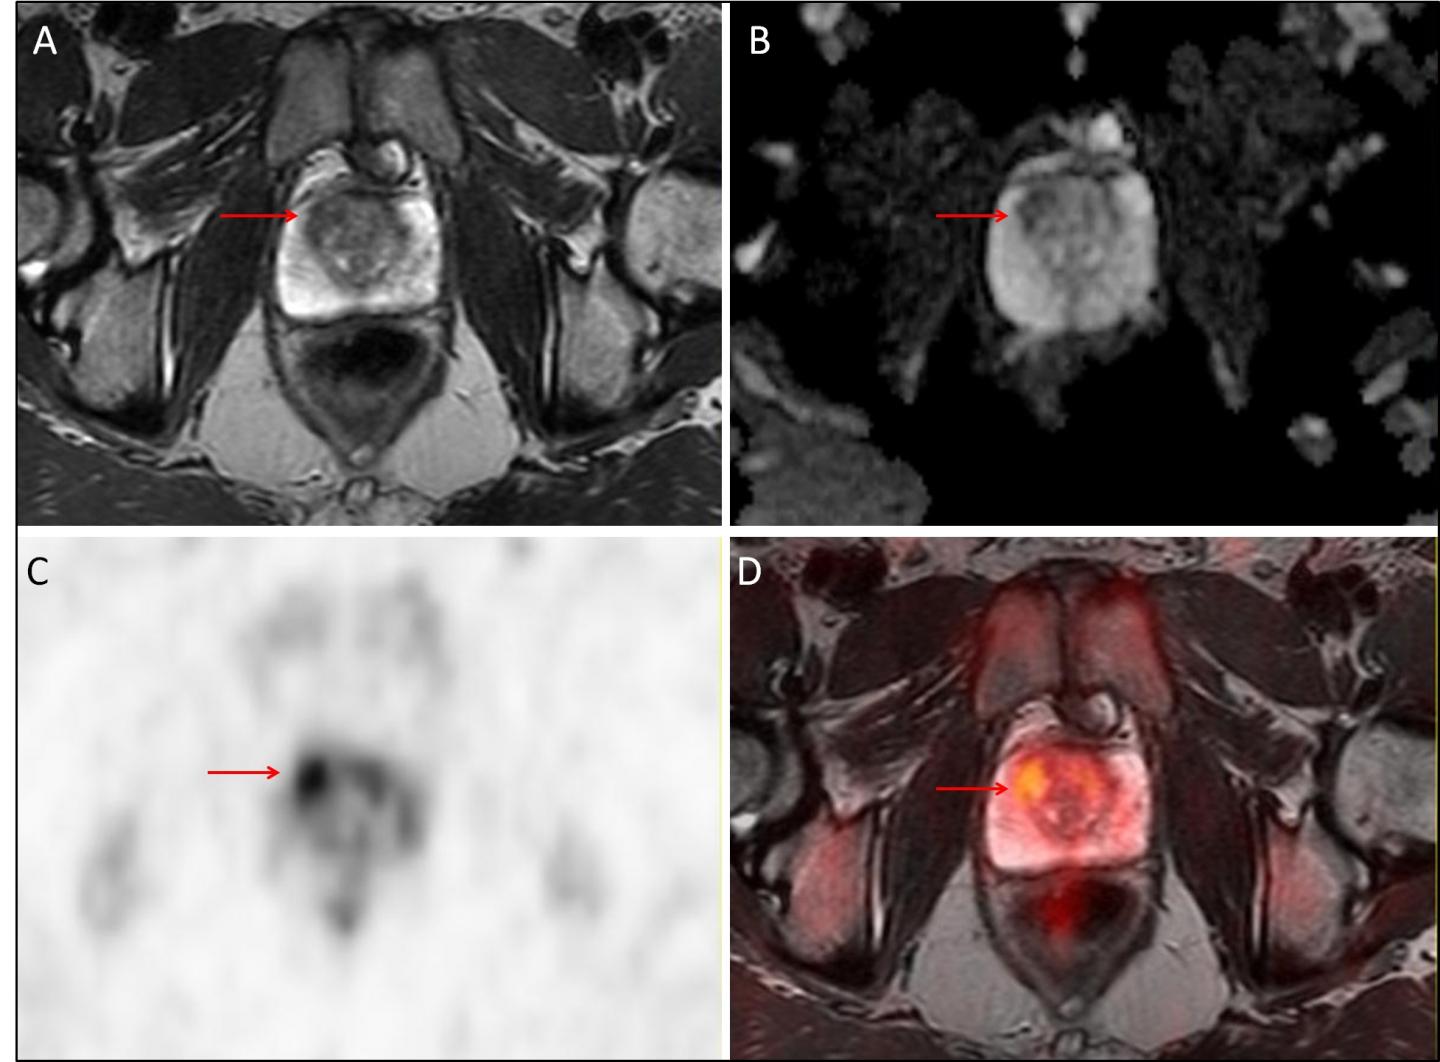 PET/MRI Comparison Images of Prostate Cancer